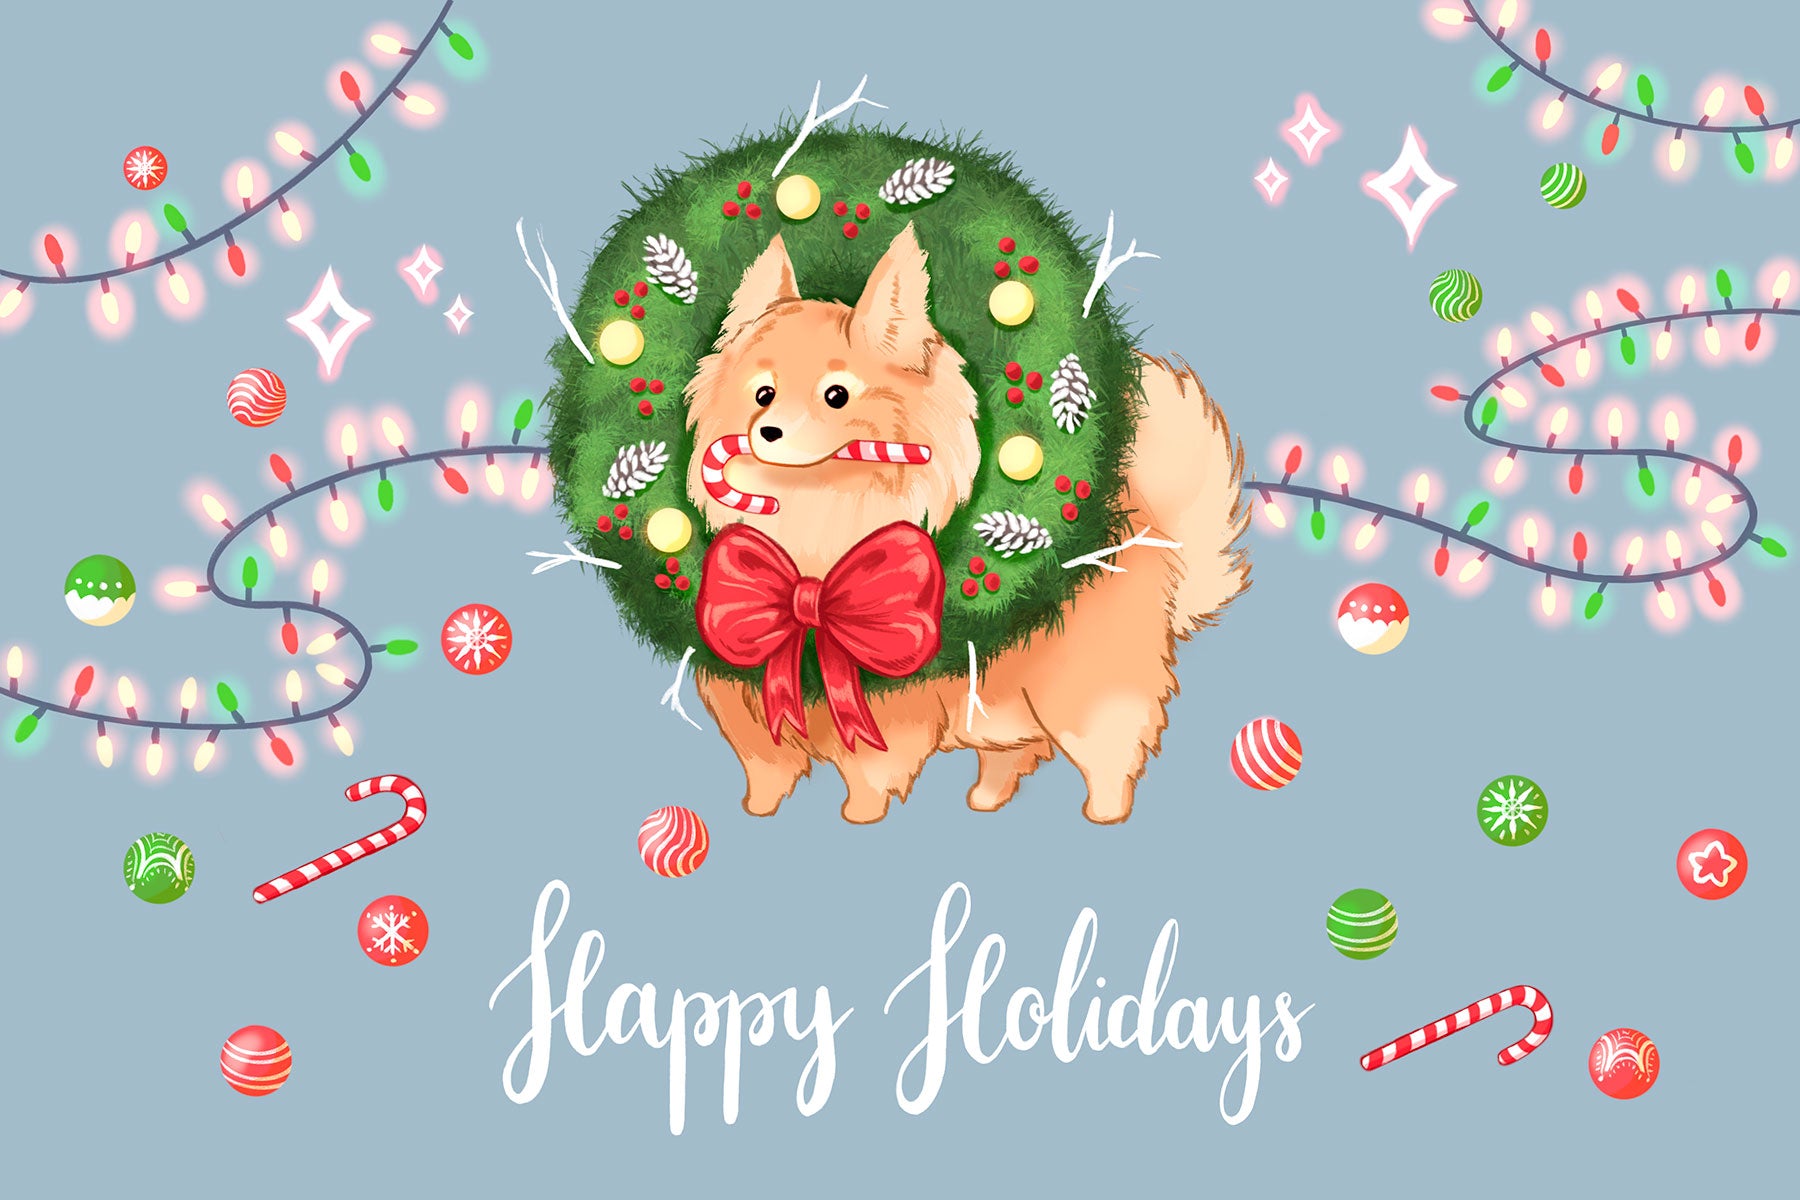 Pom Pom Holiday Wreath Card